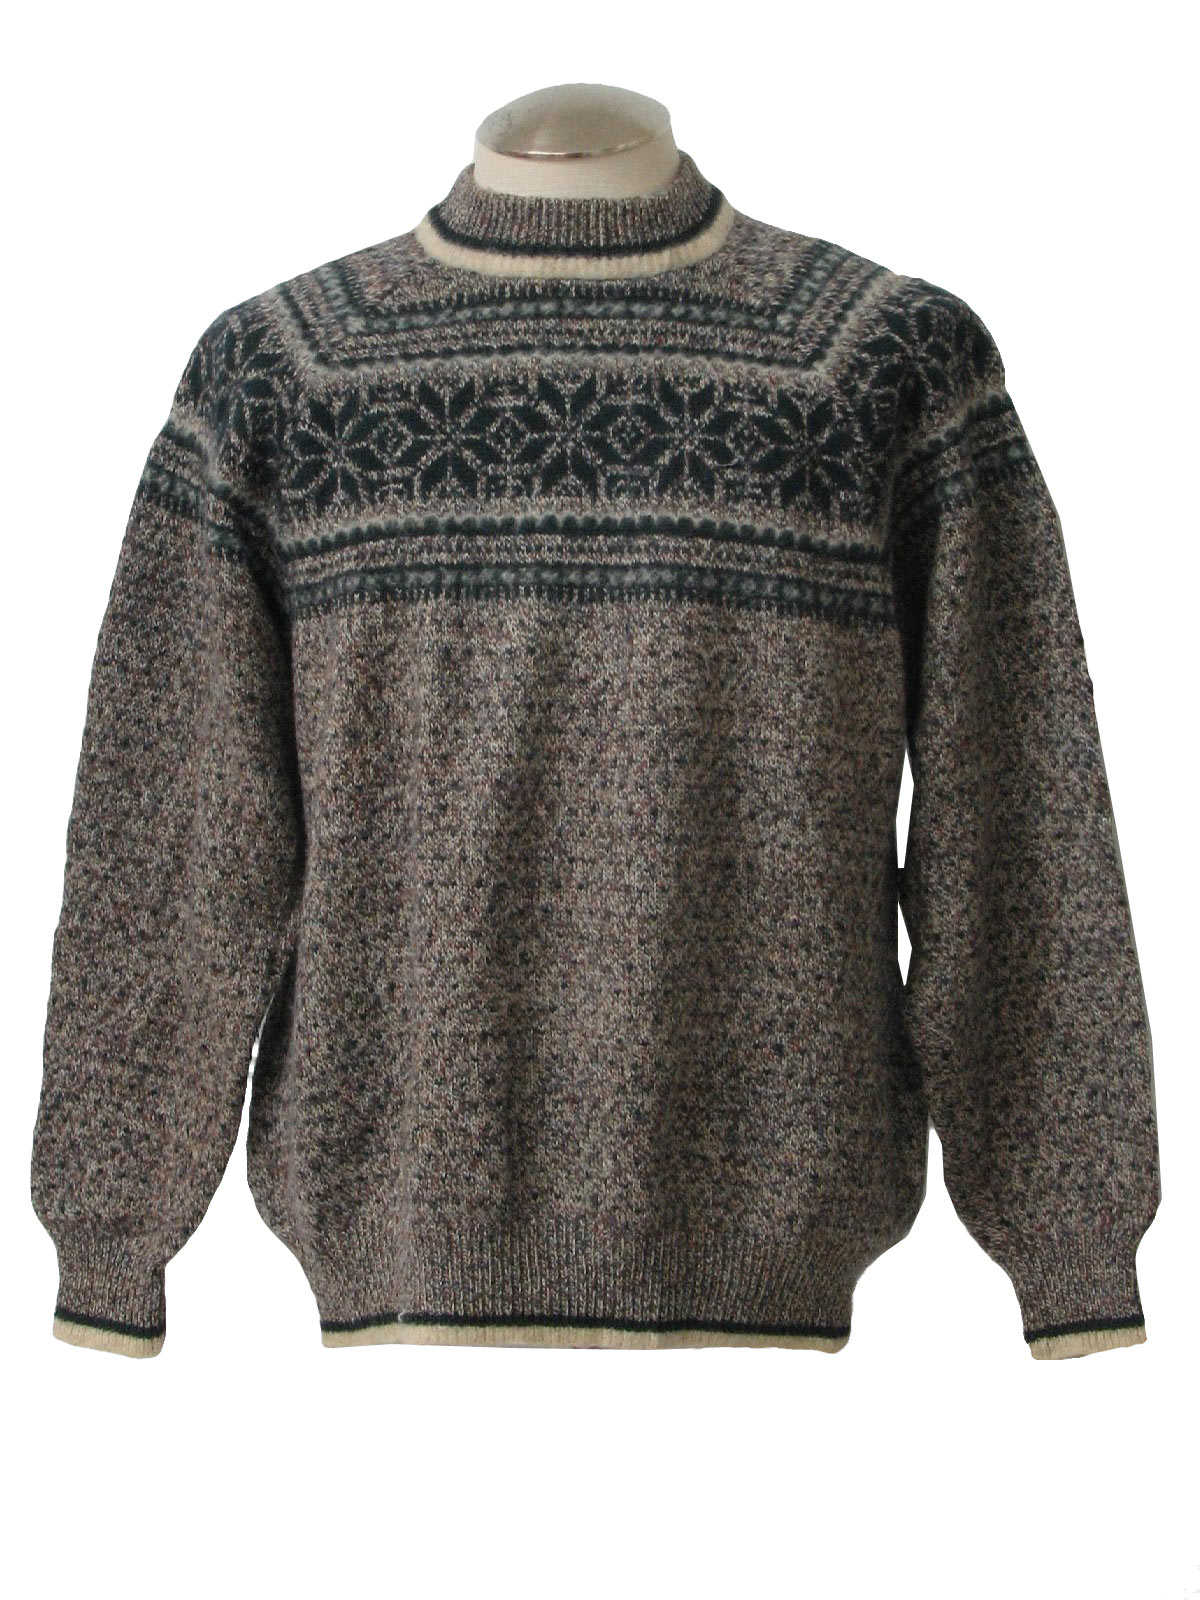 Vintage Jordache 1990s Sweater: 90s -Jordache- Mens dark teal, off ...